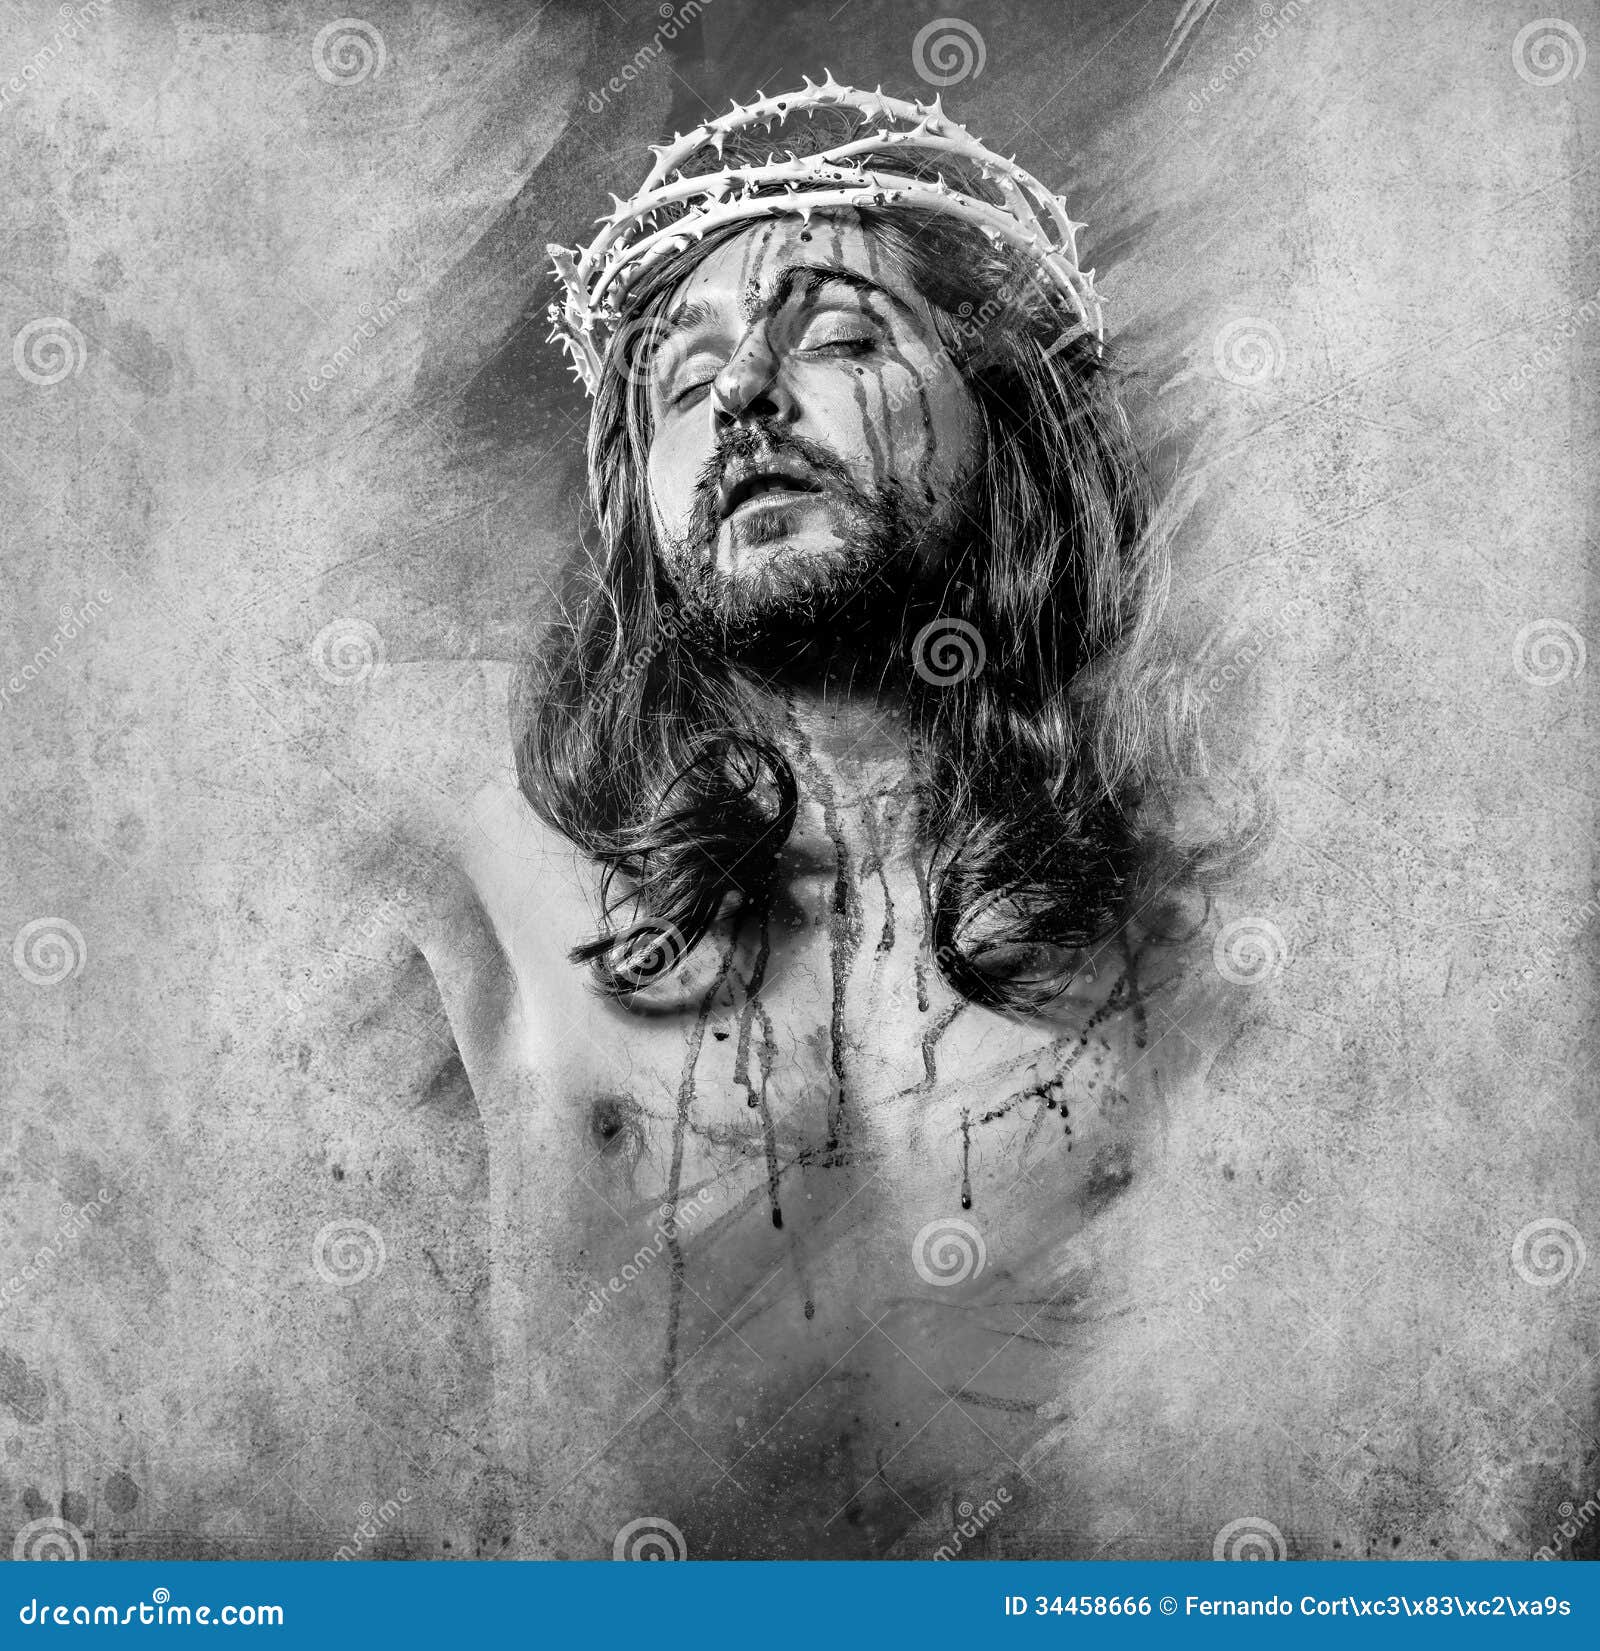 jesus christ artistic halo calvary man bleeding representation passion crown thorns art 34458666